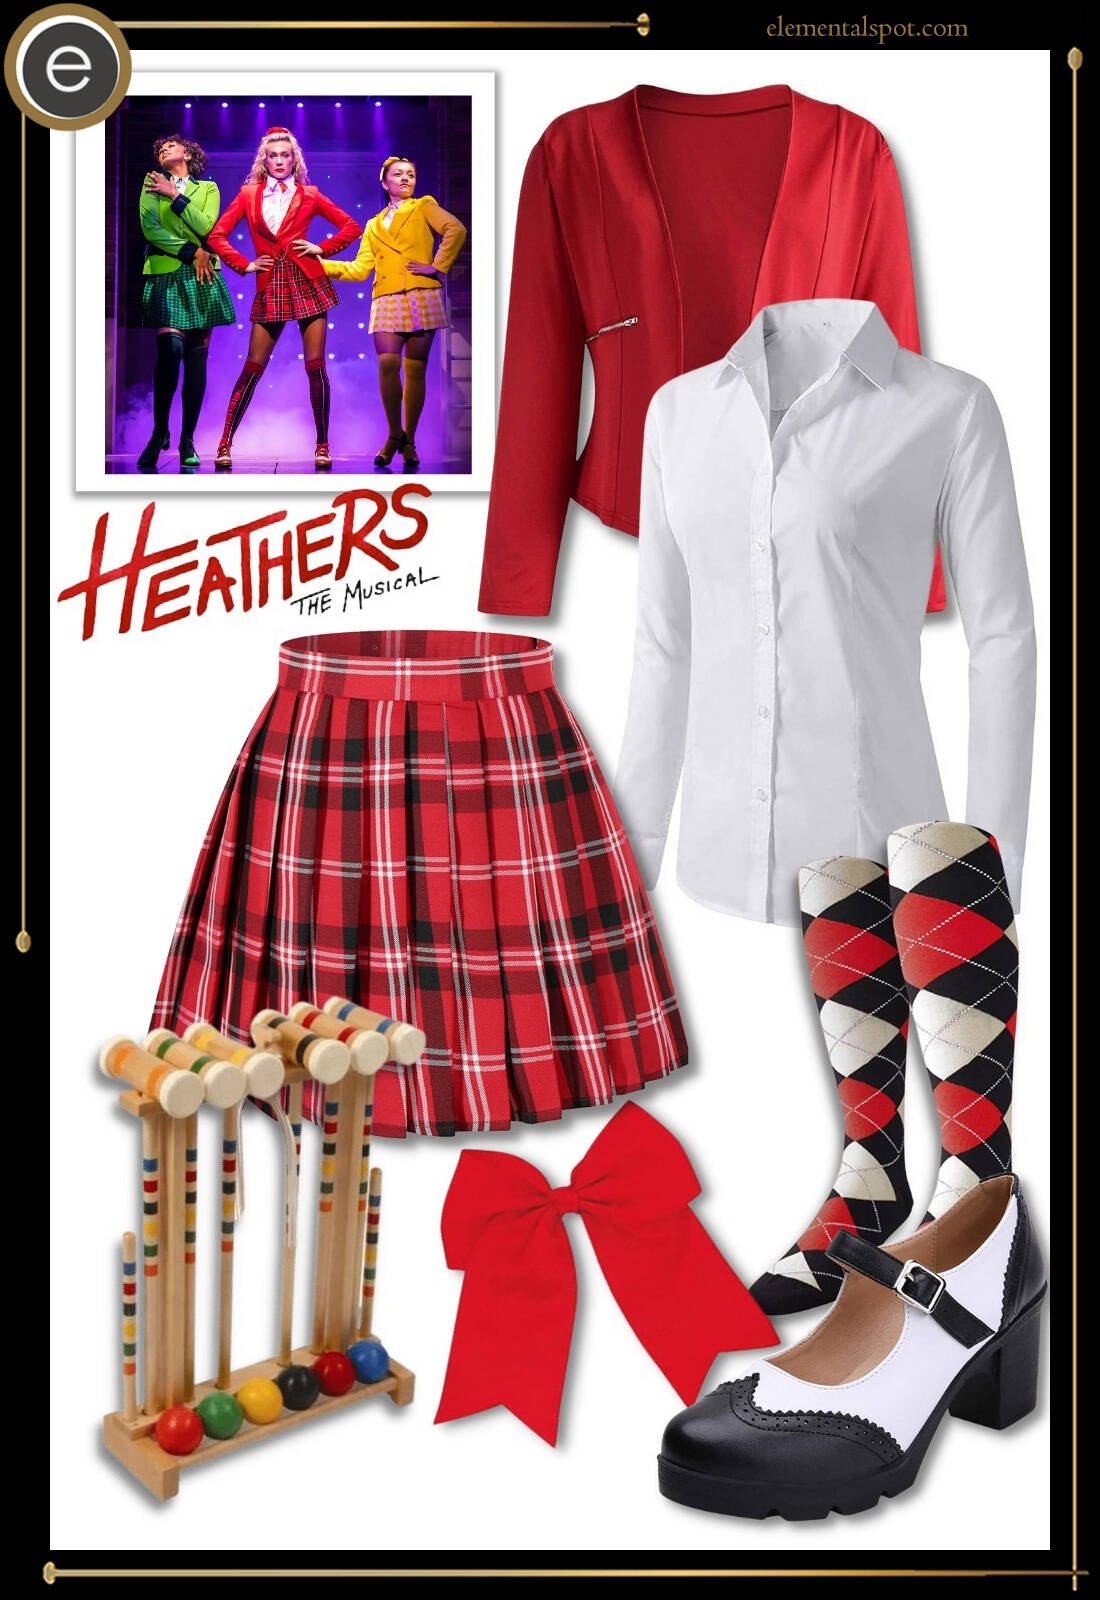 Dress Up Like Heathers The Musical - Elemental Spot